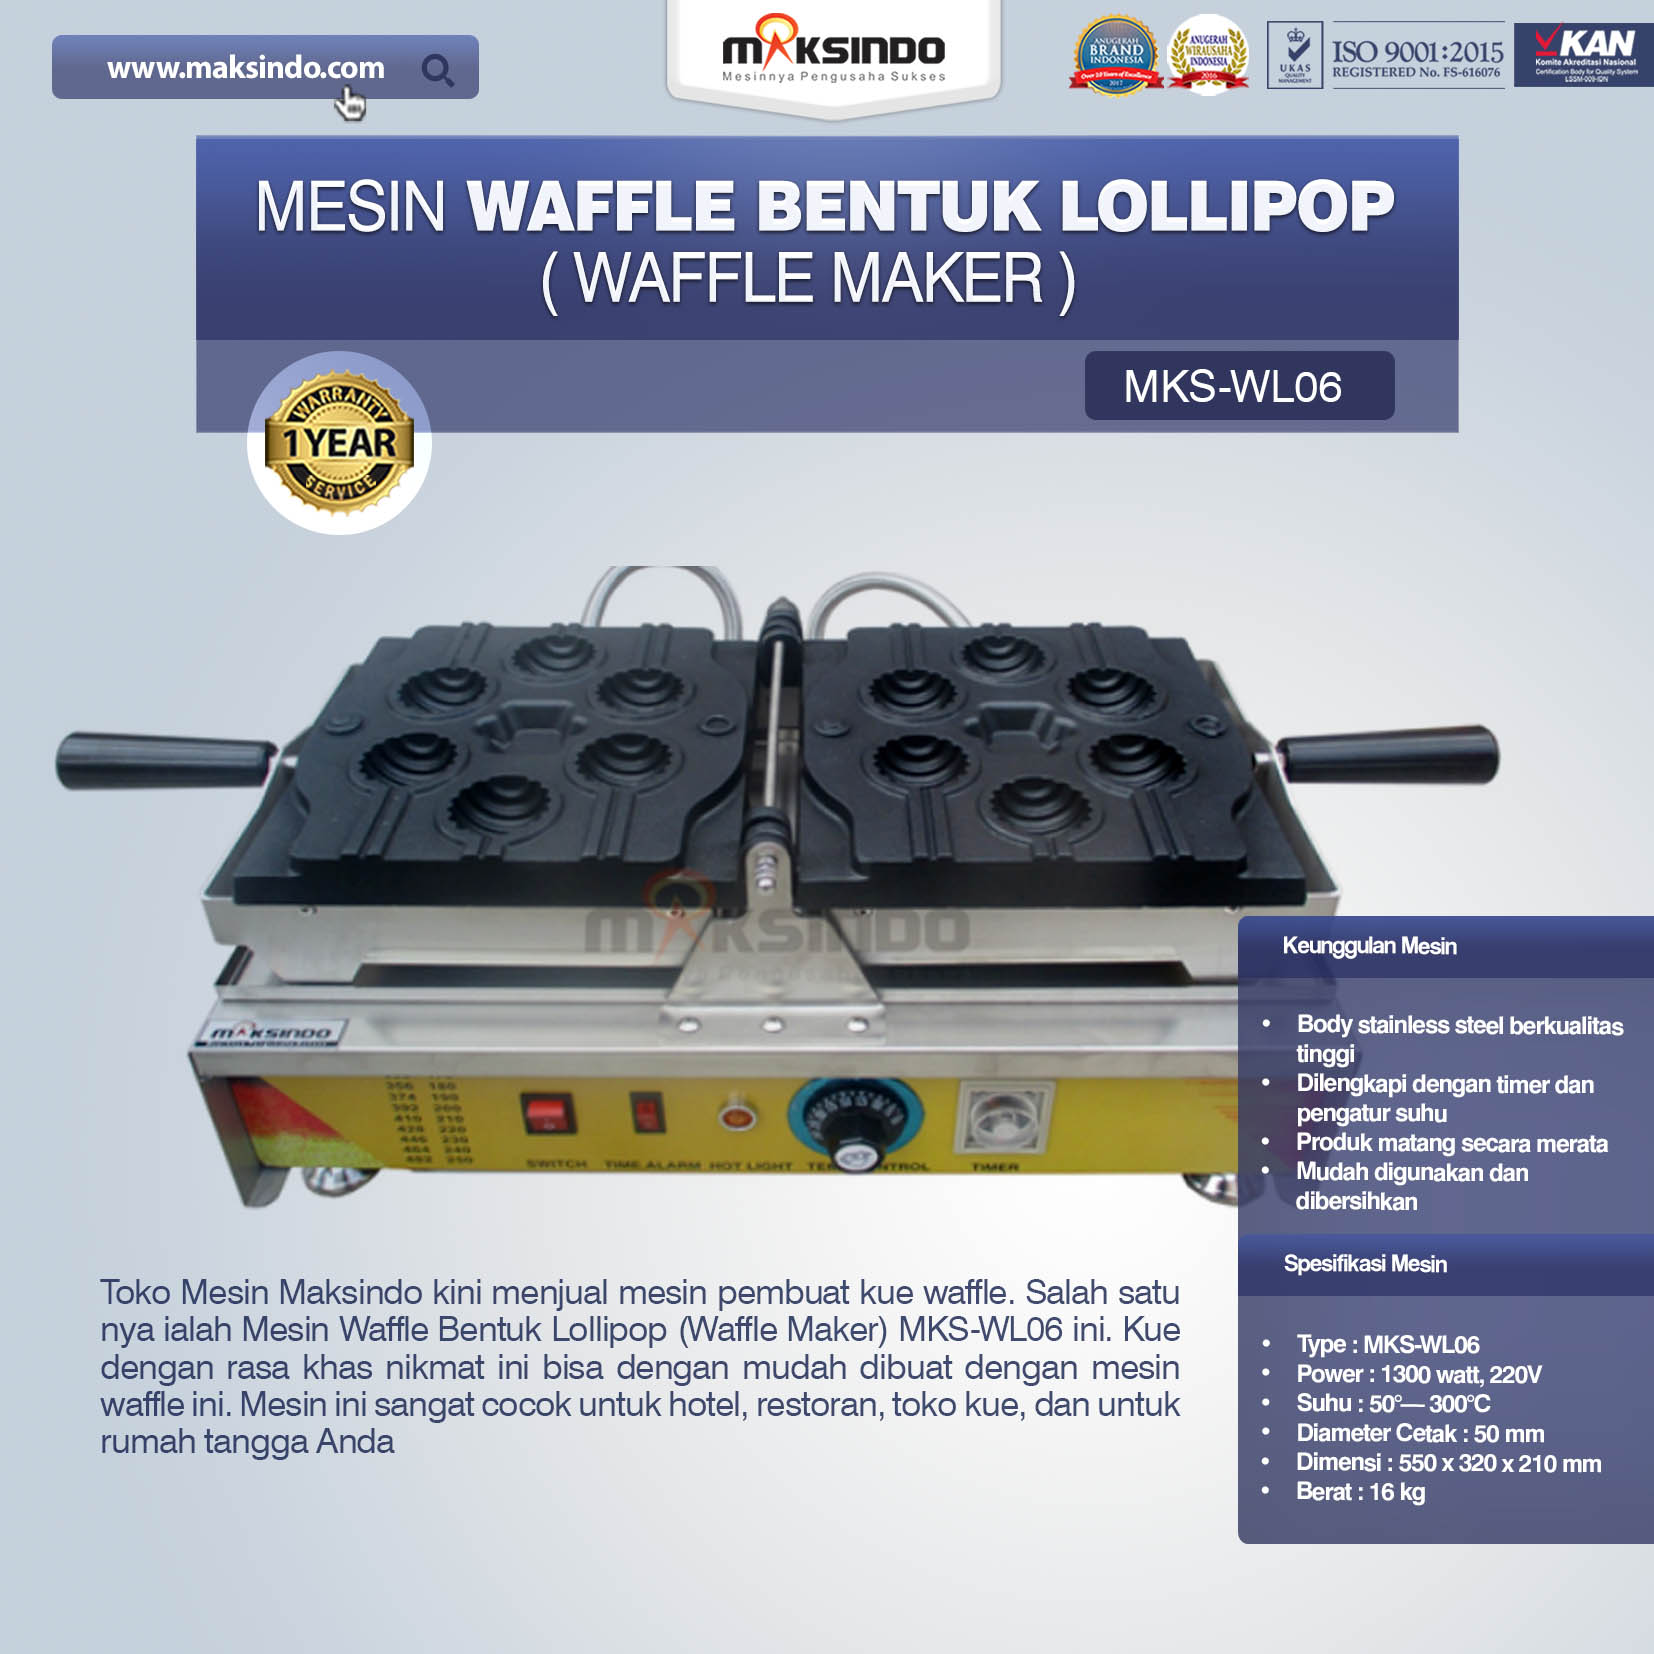 Jual Mesin Waffle Bentuk Lollipop (Waffle Maker) MKS-WL06 di Tangerang